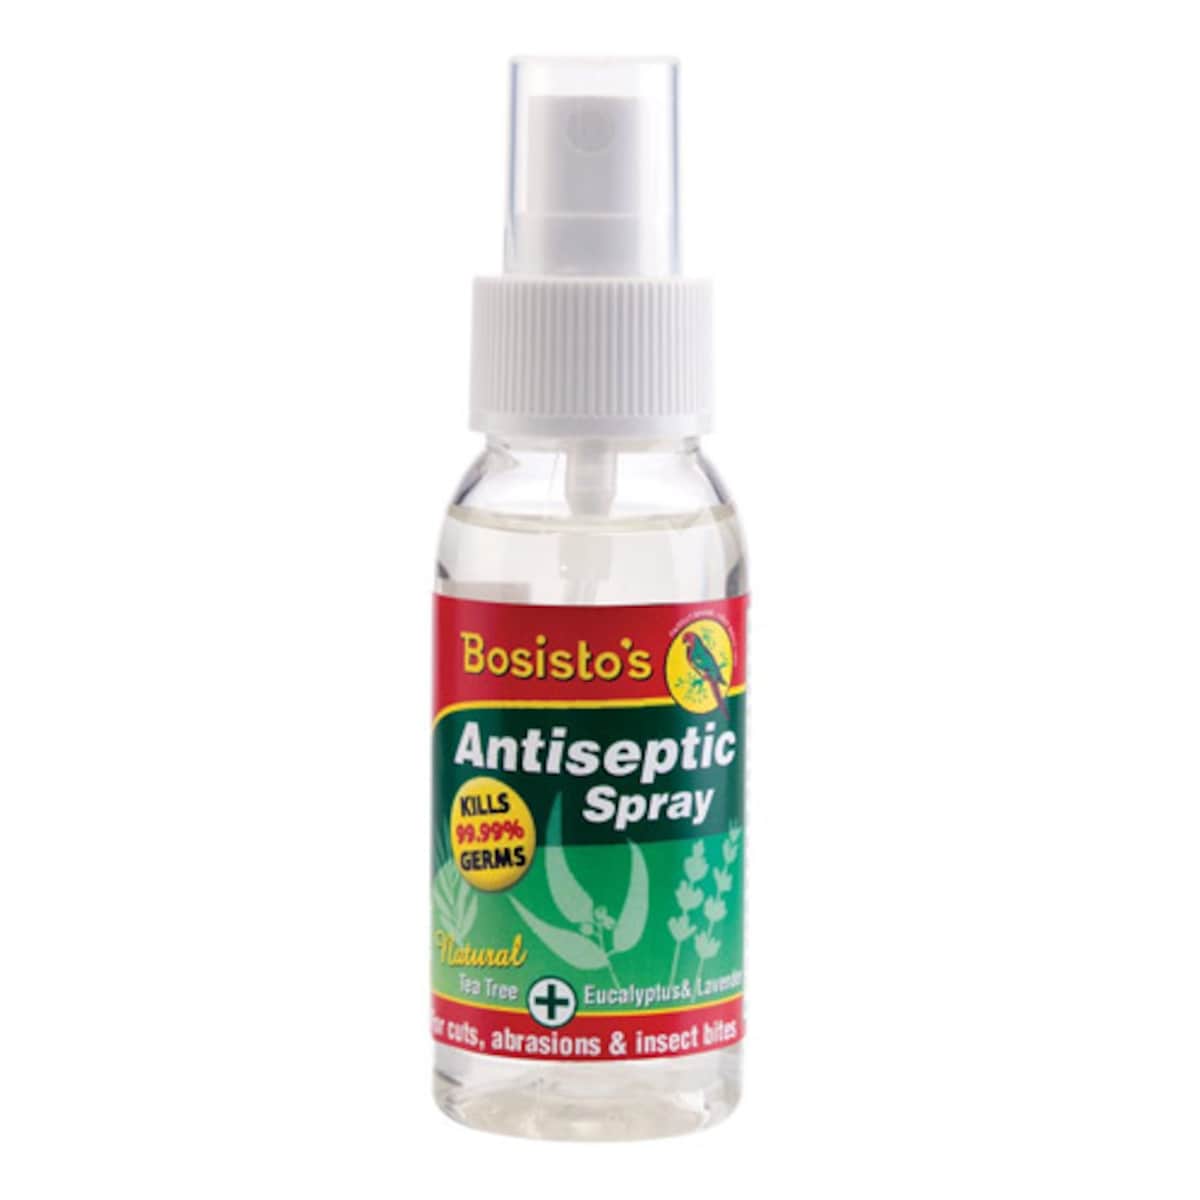 Bosistos Antiseptic Spray 55ml